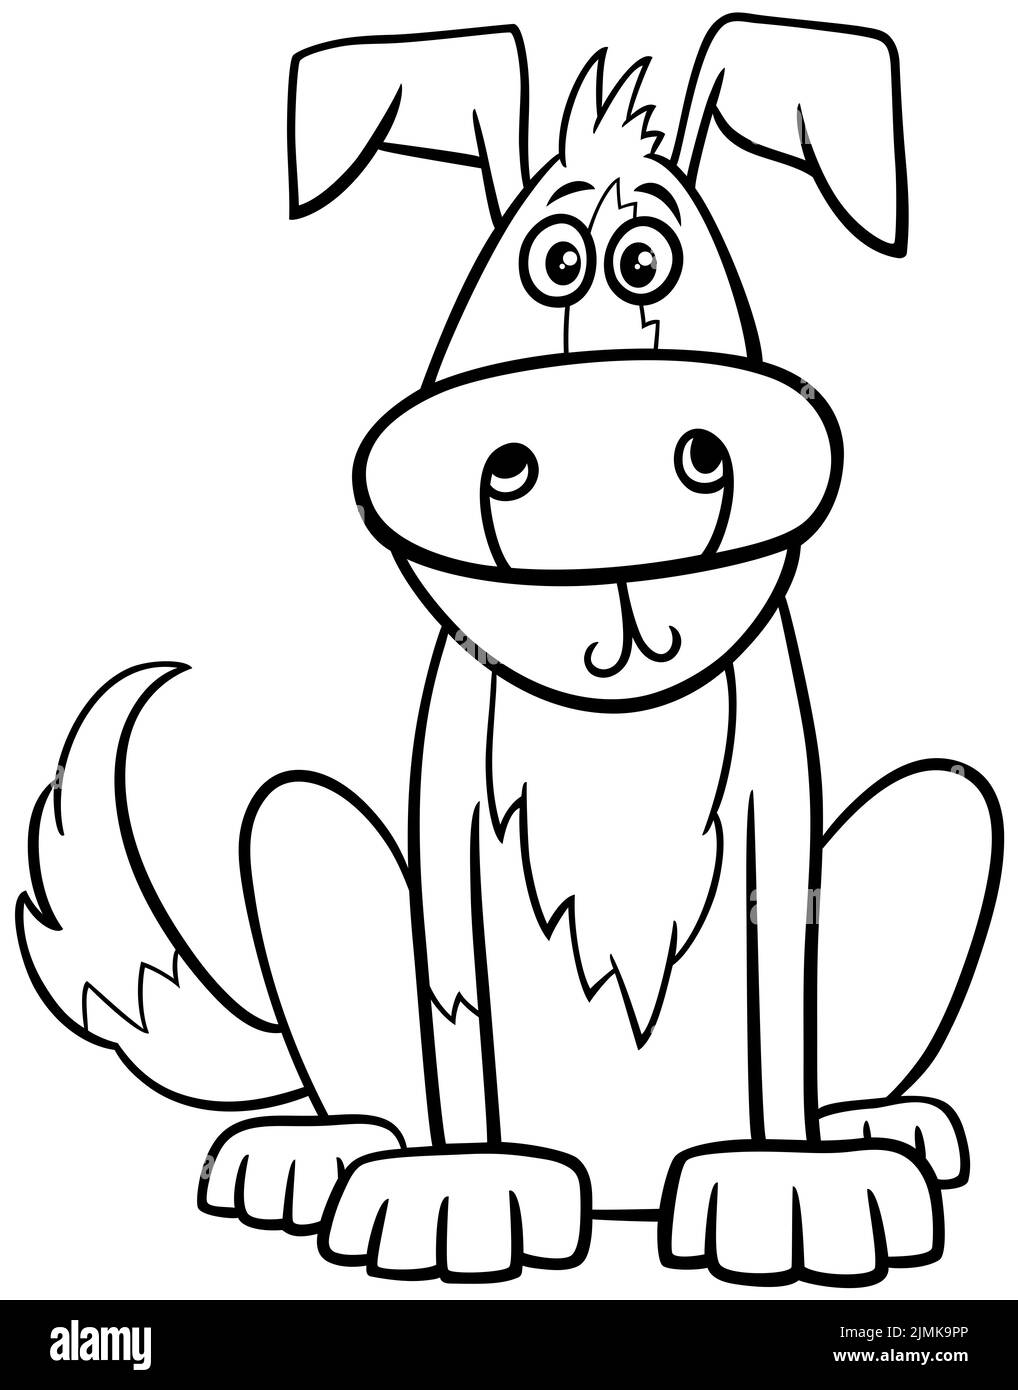 Cartoon funny dog comic animal character Stock Photo